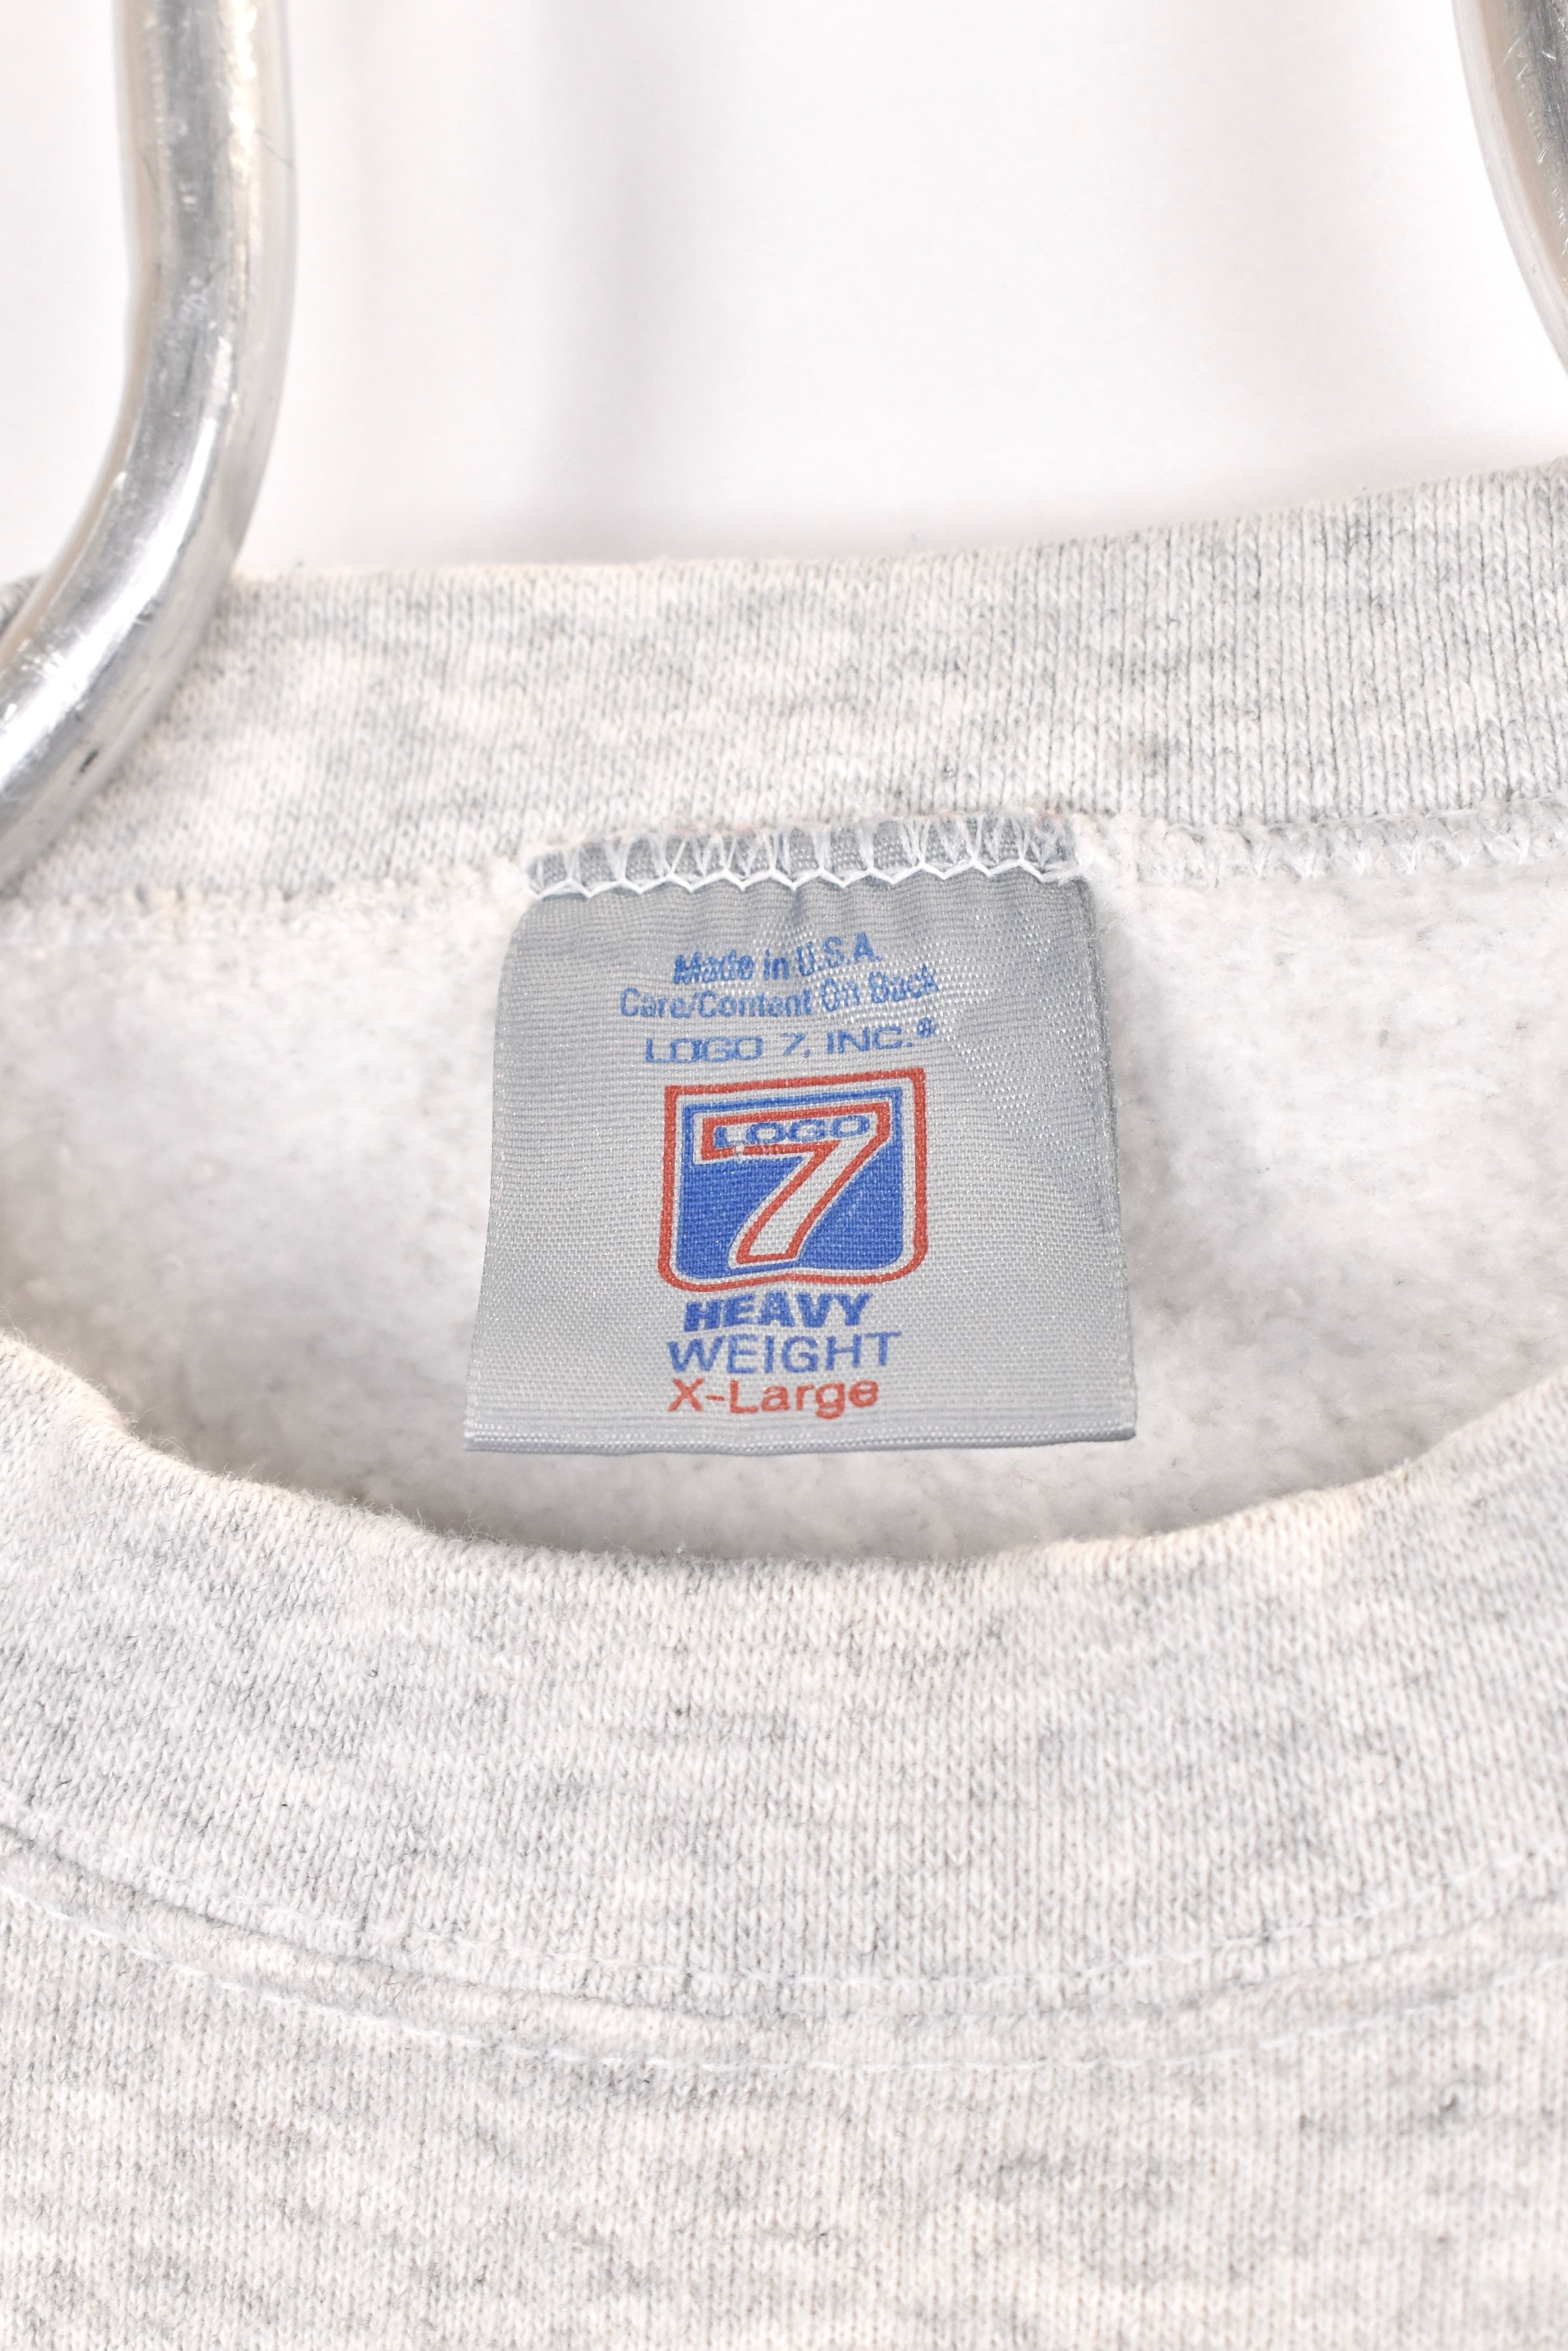 Vintage Green Bay Packers sweatshirt, NFL grey embroidered crewneck - AU XL PRO SPORT